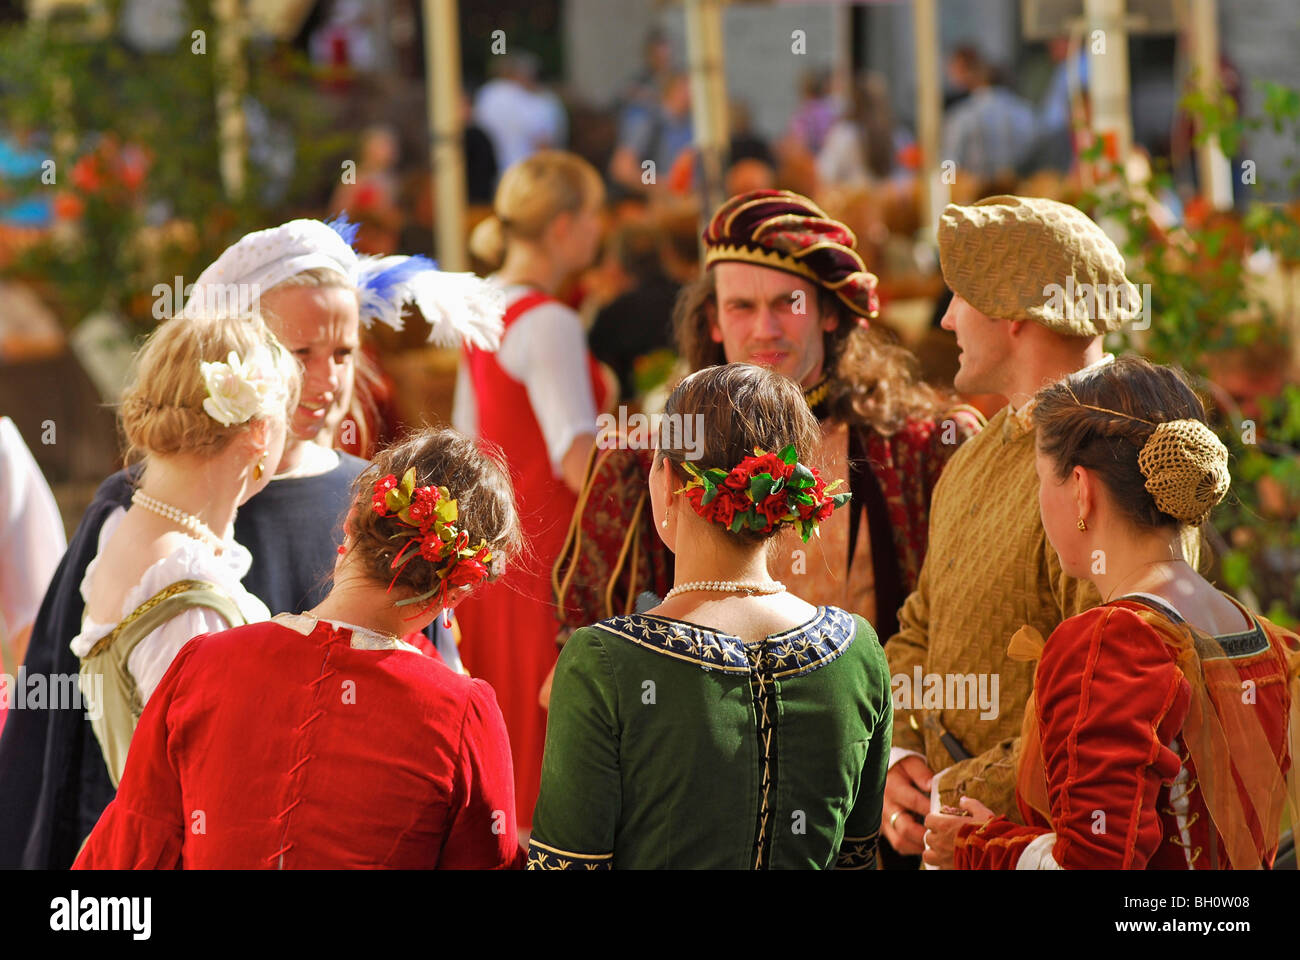 Dance group from Riga at the mediaeval market, Tallinn, Estonia Stock Photo